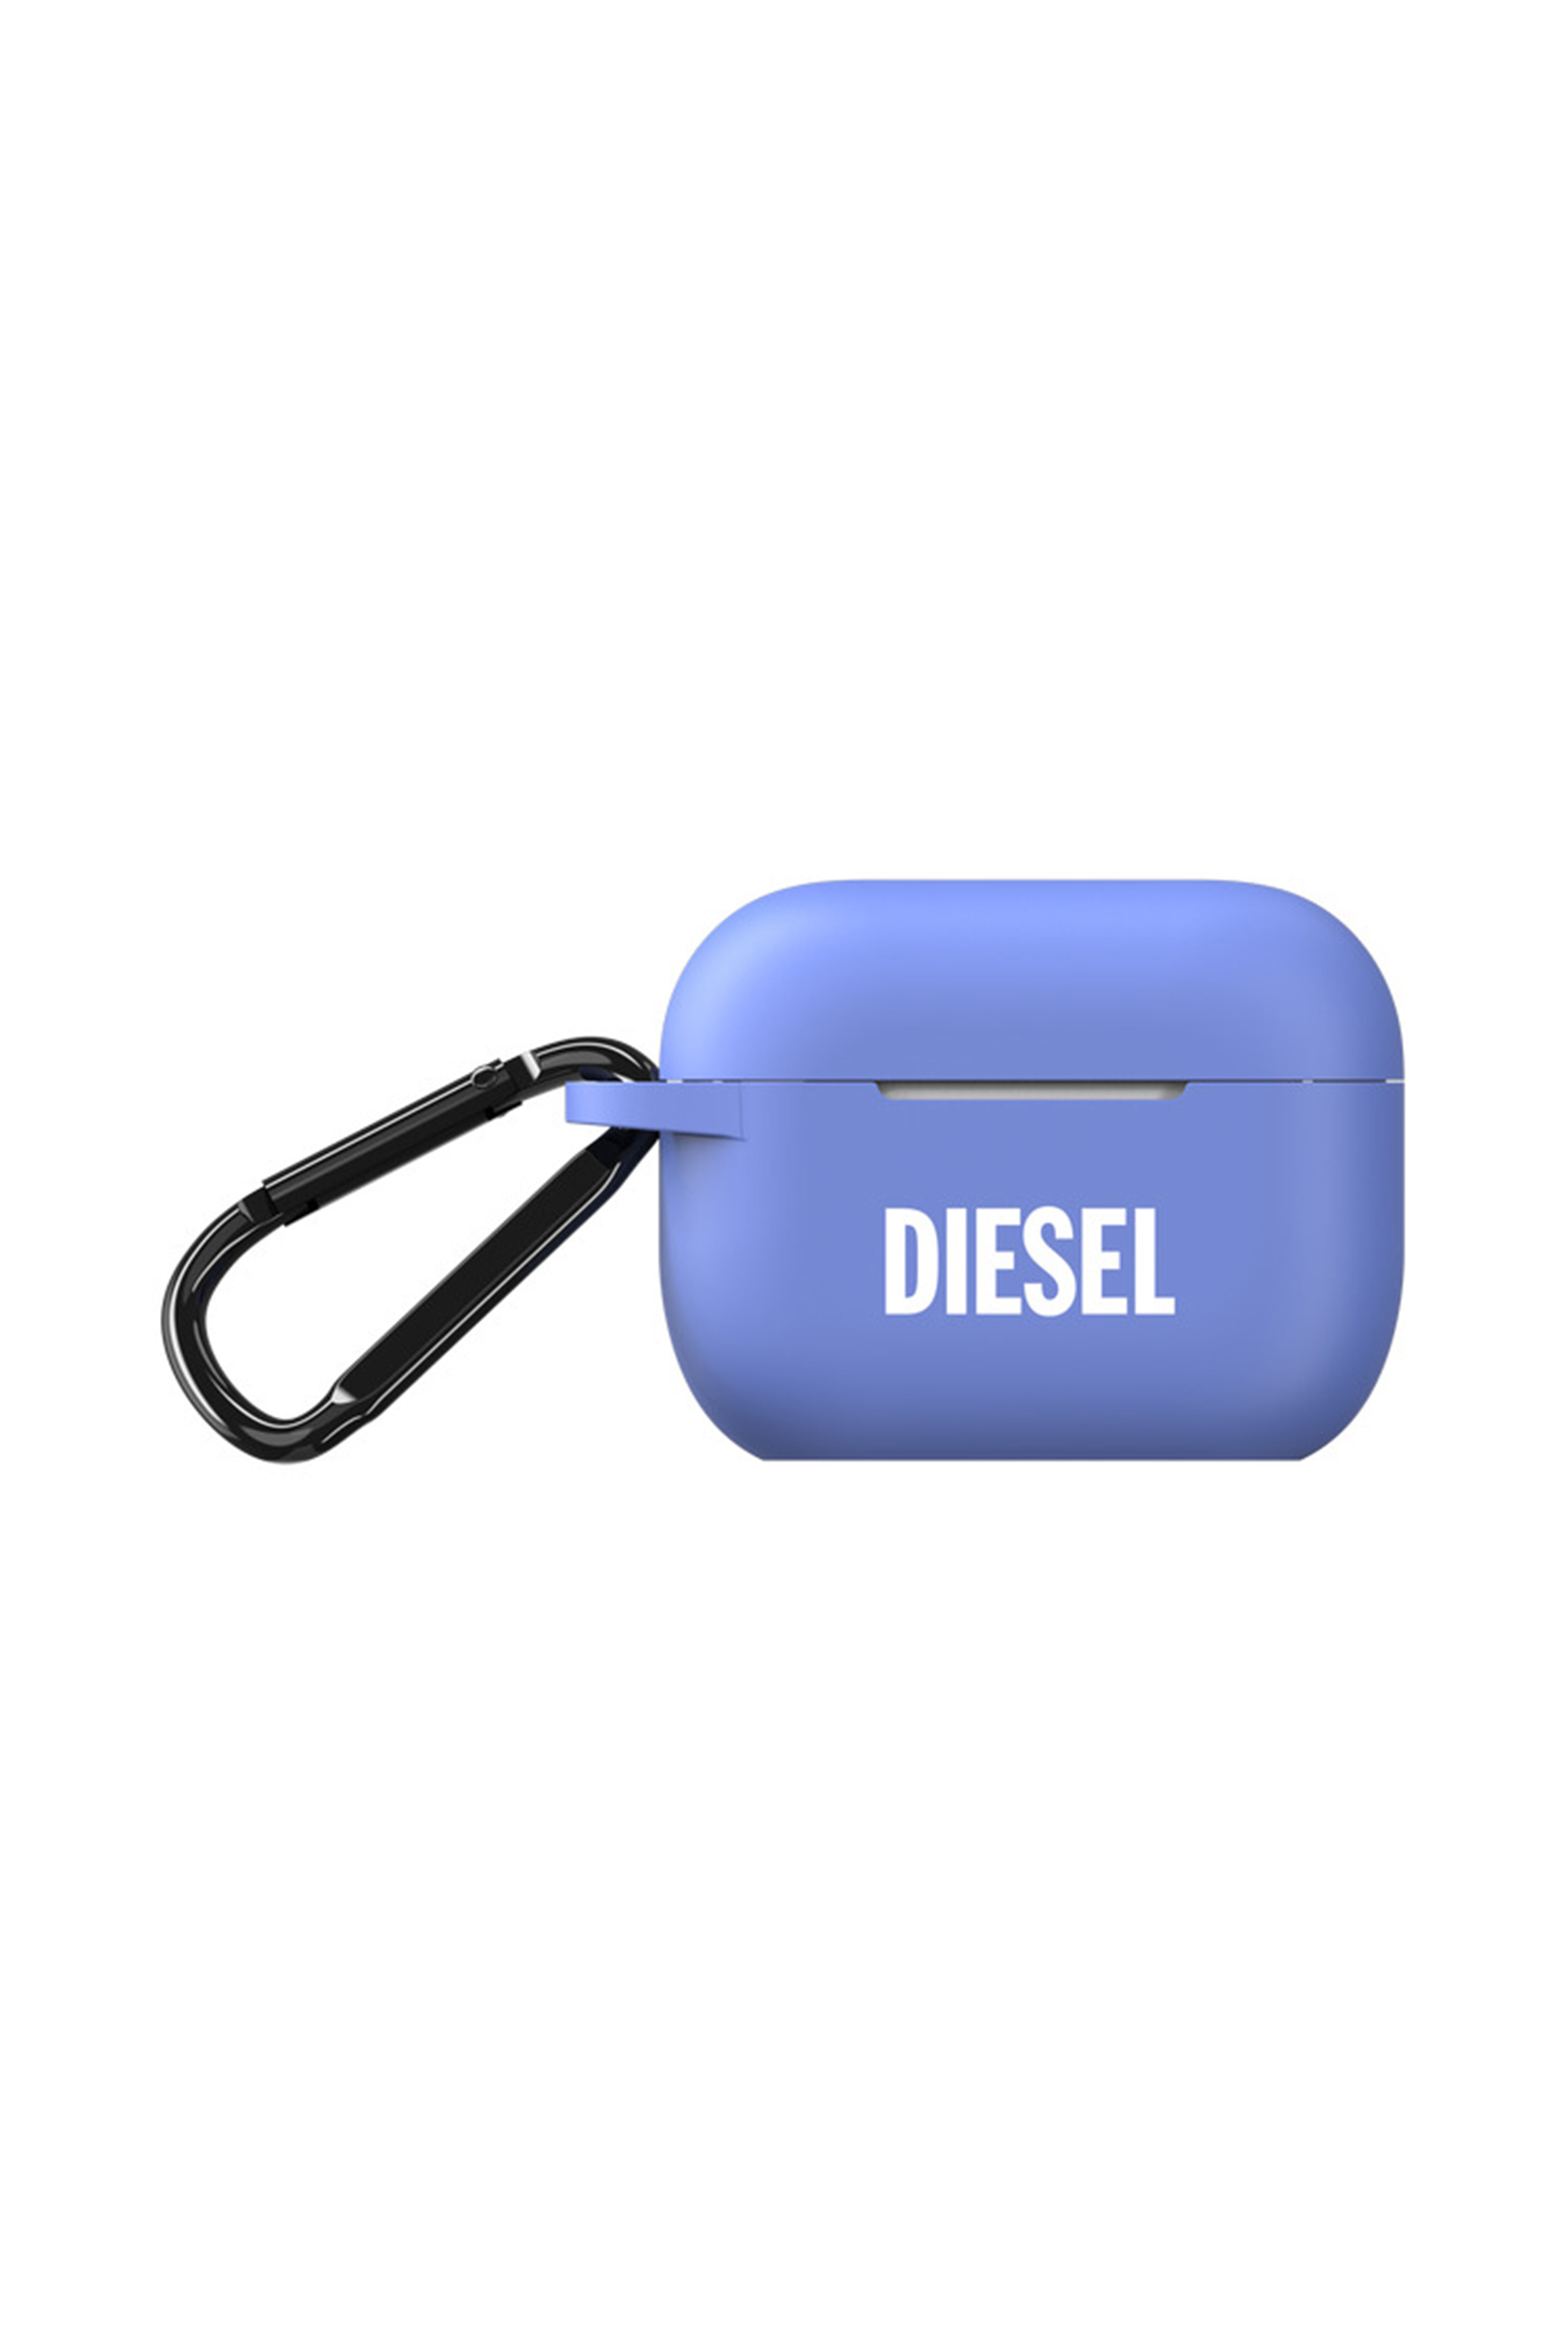 Diesel - Cover in silicone per AirPods Pro - Cover - Unisex - Blu